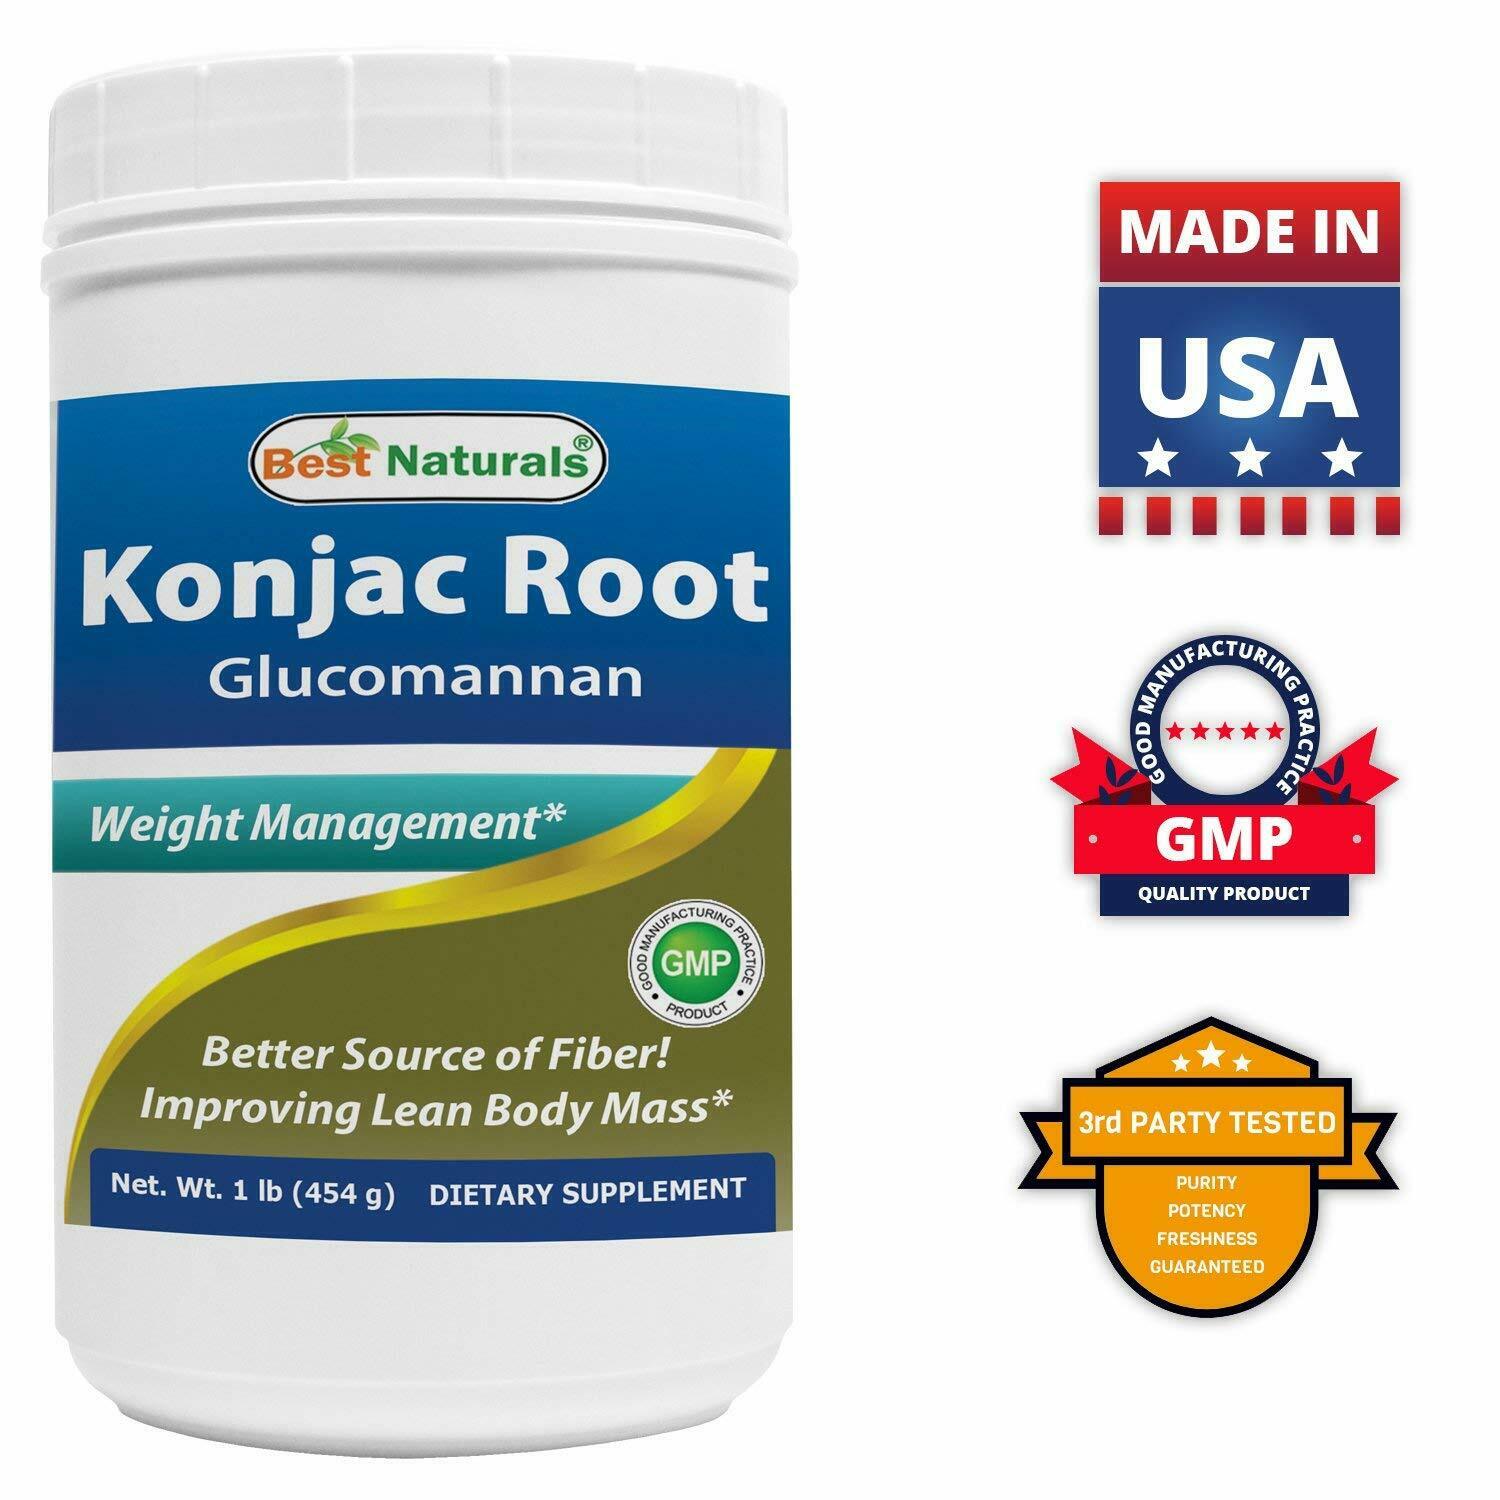 Best Naturals Glucomannan Konjac Root Powder 1lb - Unisex Weight Loss Powder